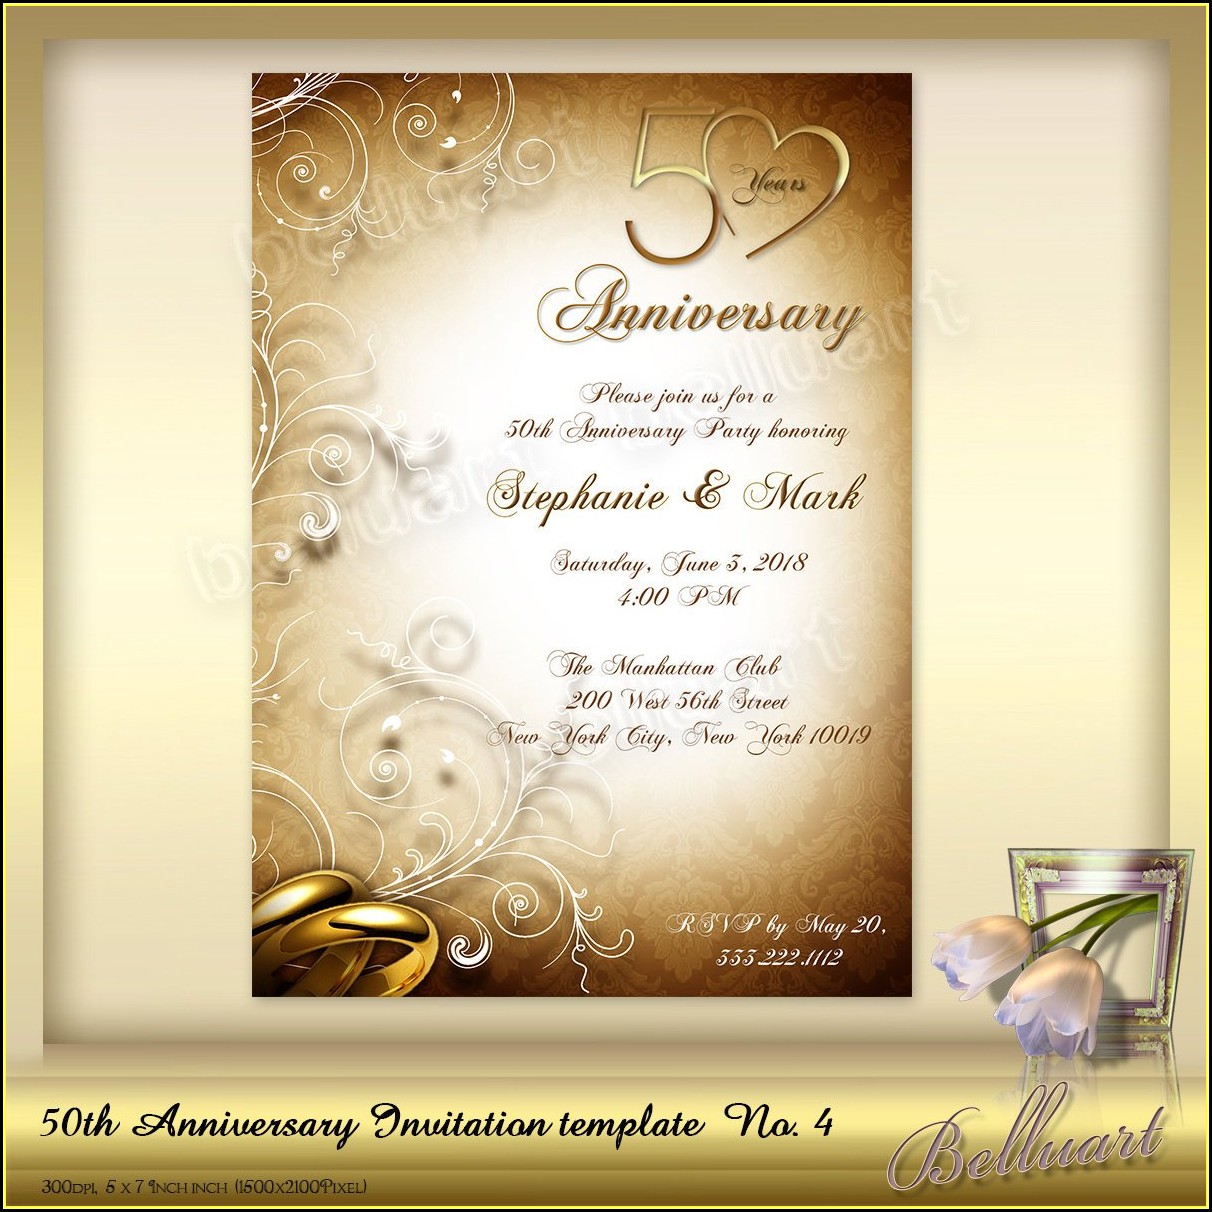 50th Wedding Anniversary Invitation Templates Free Download